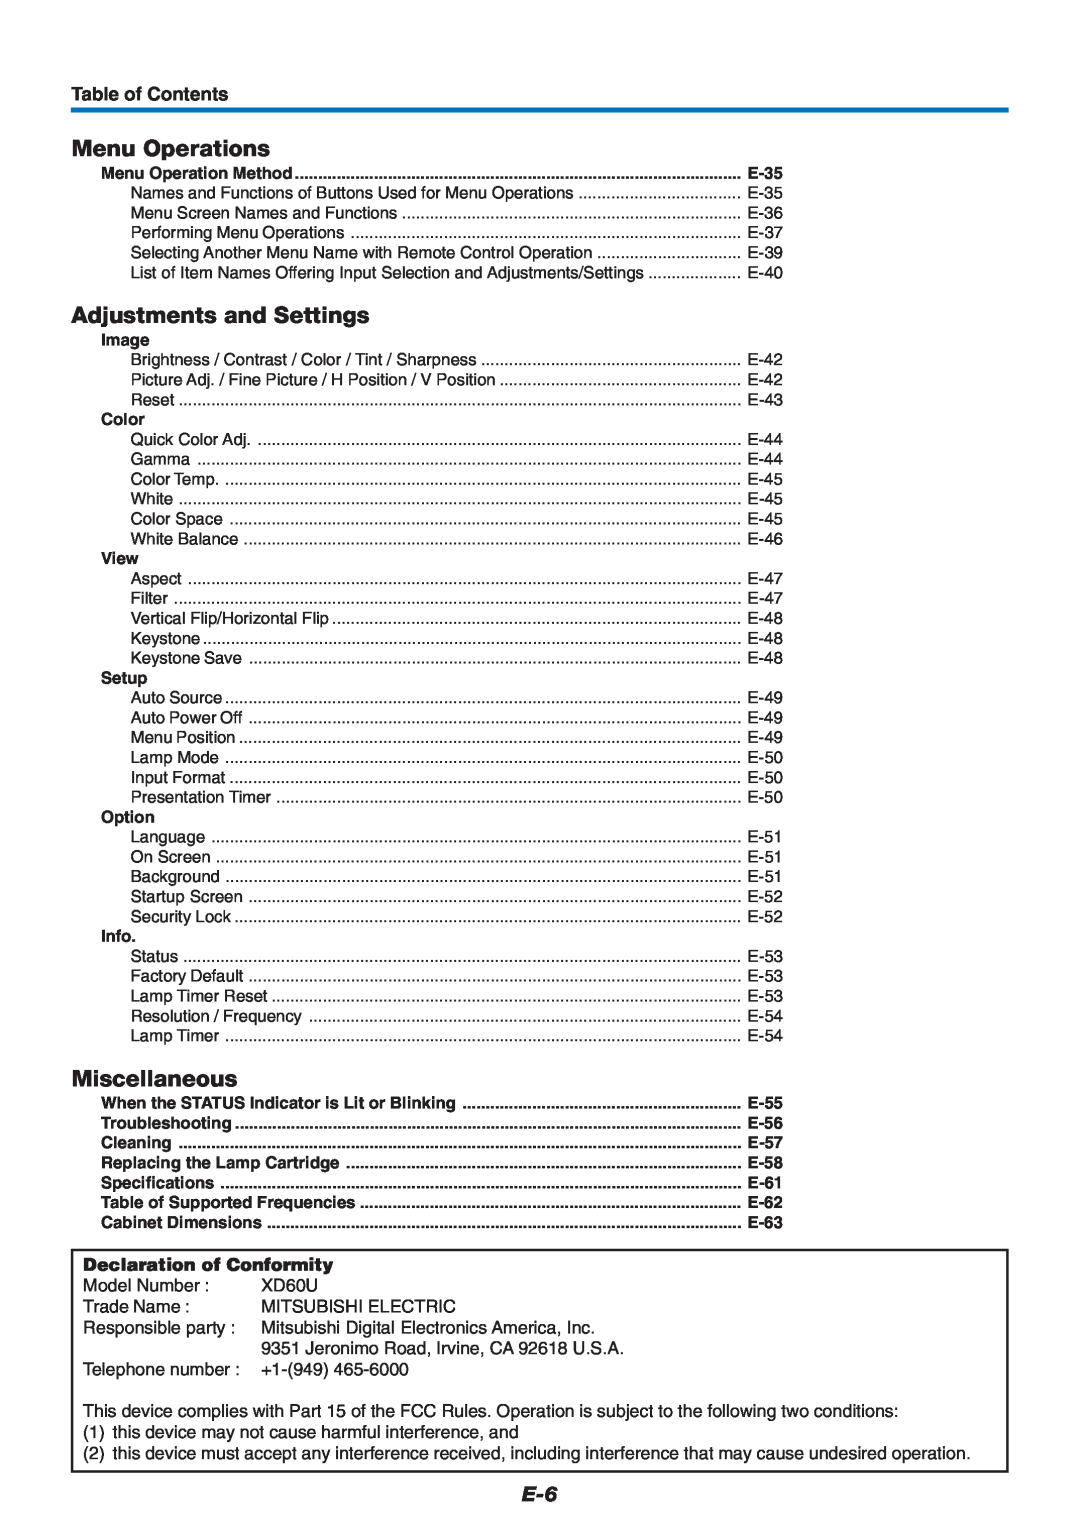 Mitsubishi Electronics XD60U Menu Operations, Adjustments and Settings, Miscellaneous, Table of Contents, E-35, Image 